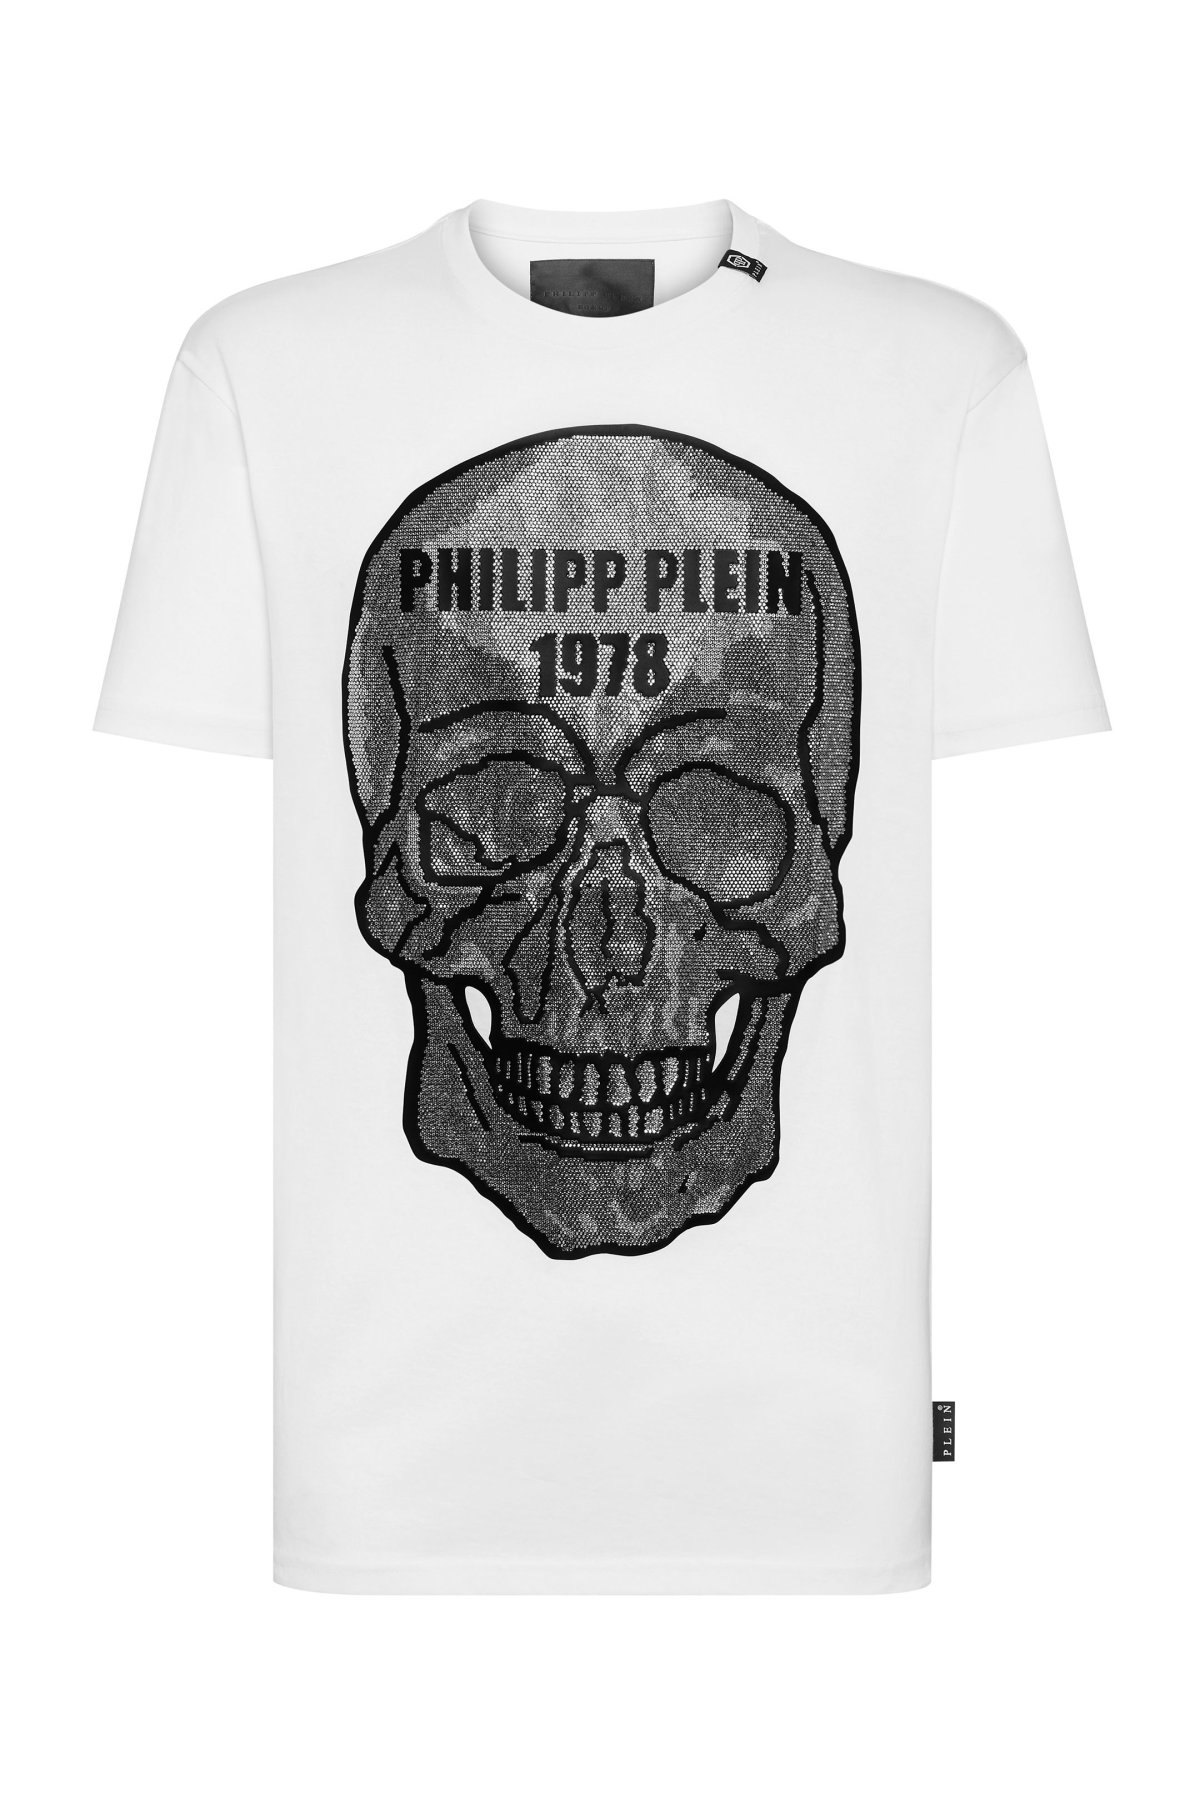 Philipp Plein MTK5231 PJY002N tričko bílé